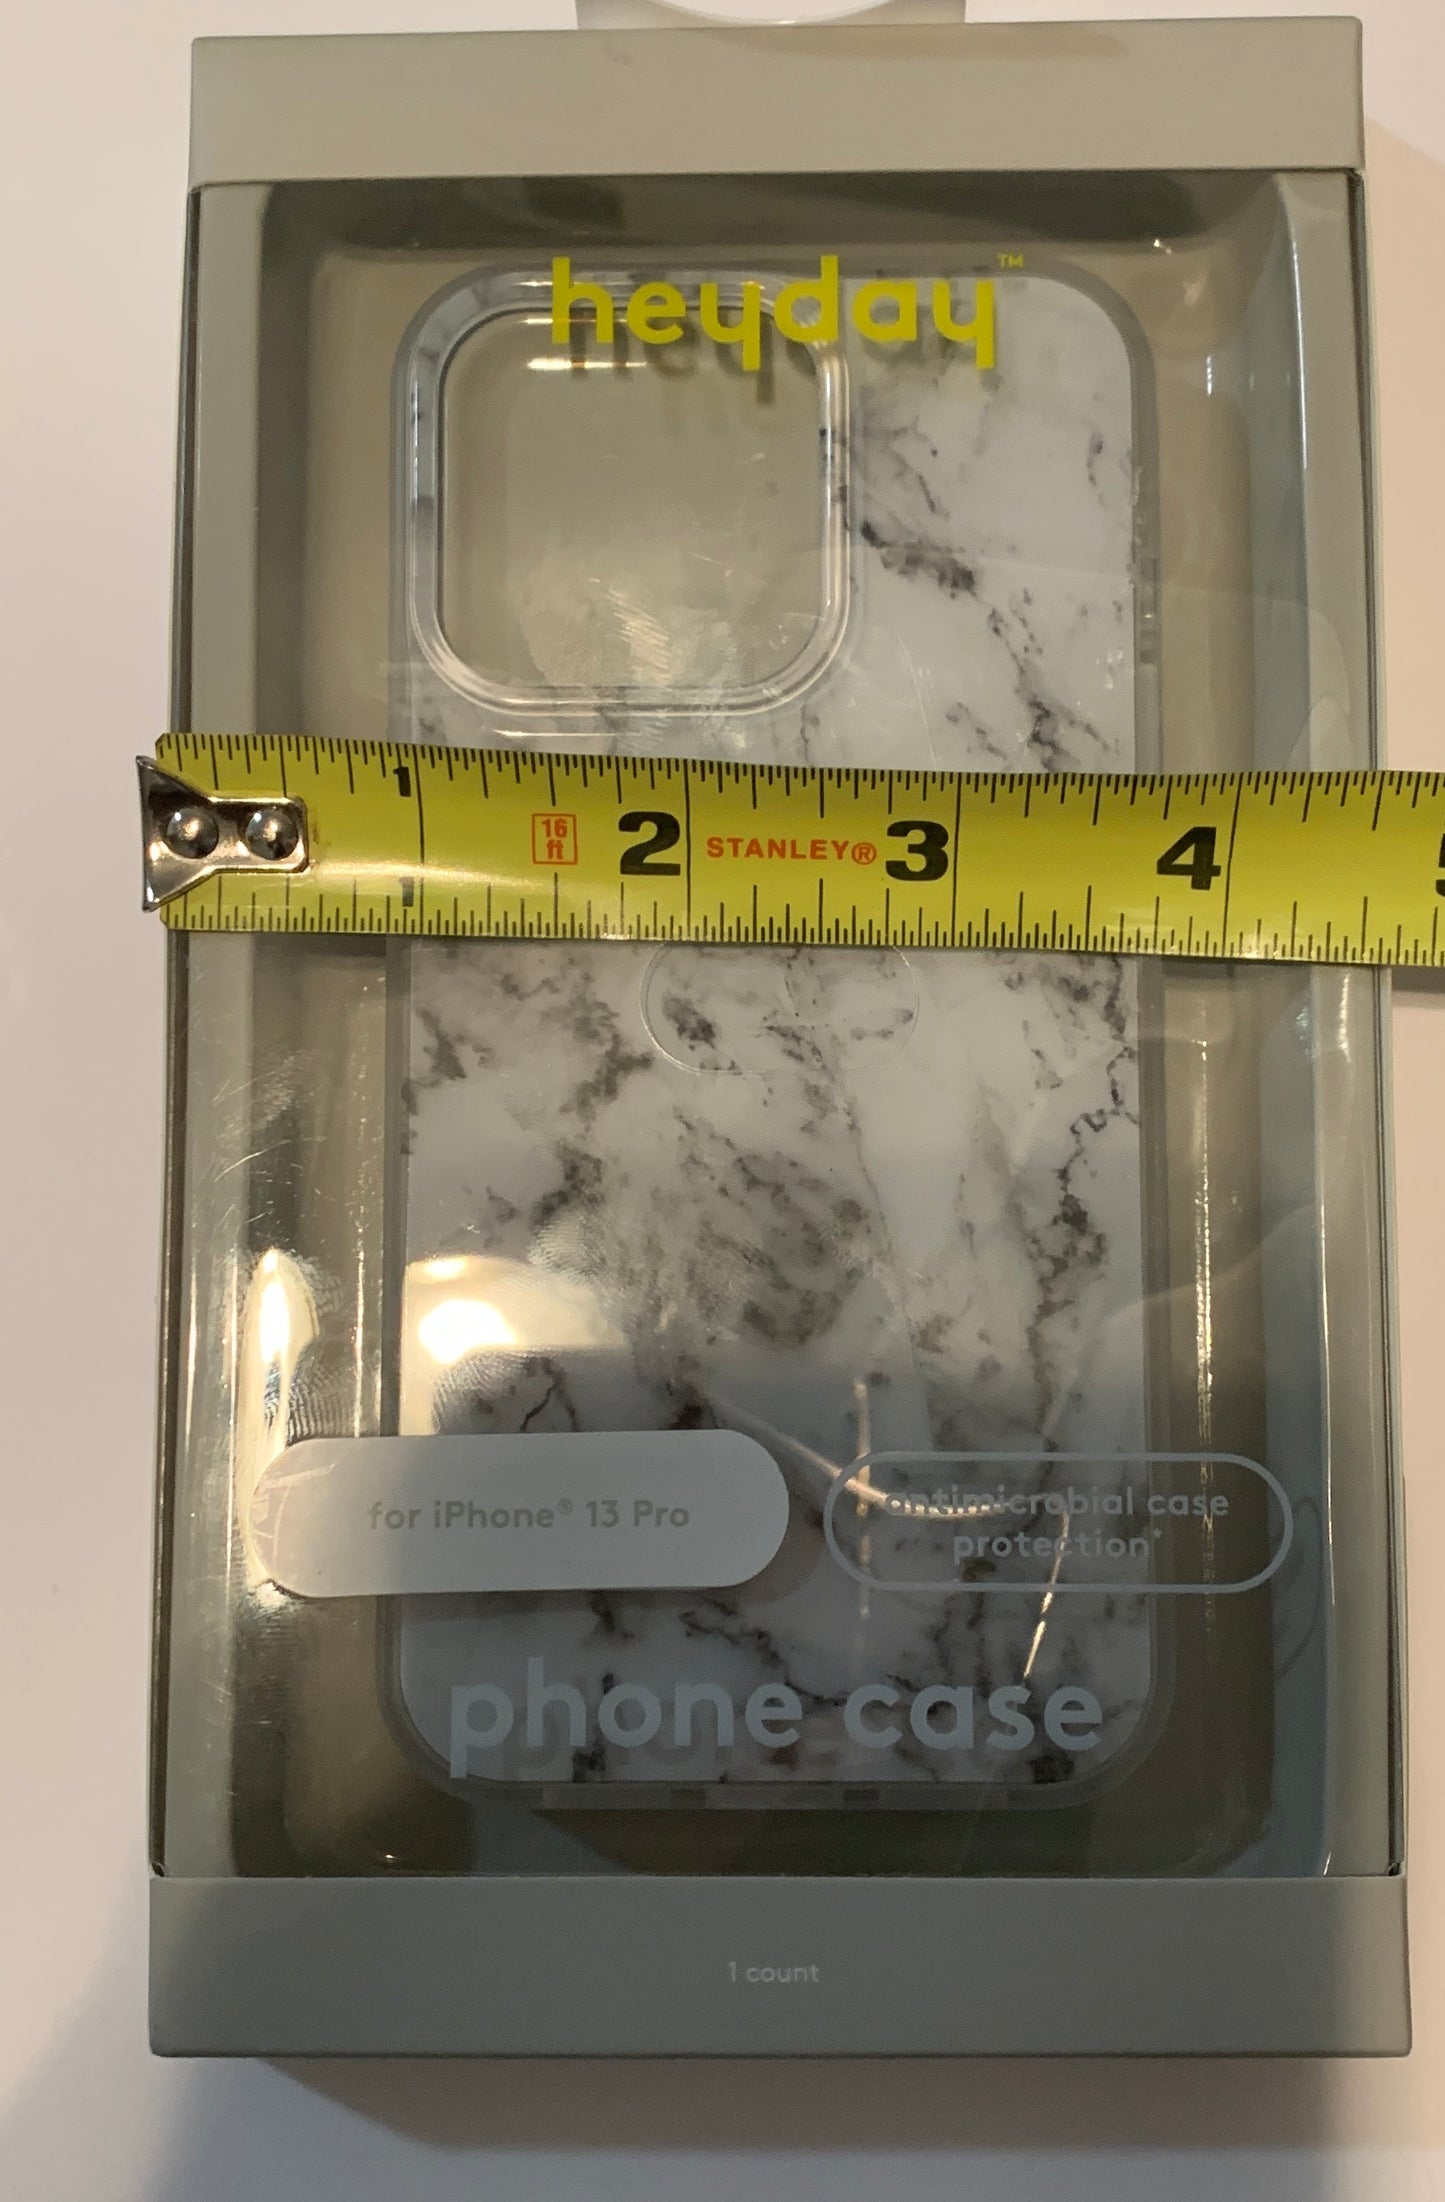 Phone case